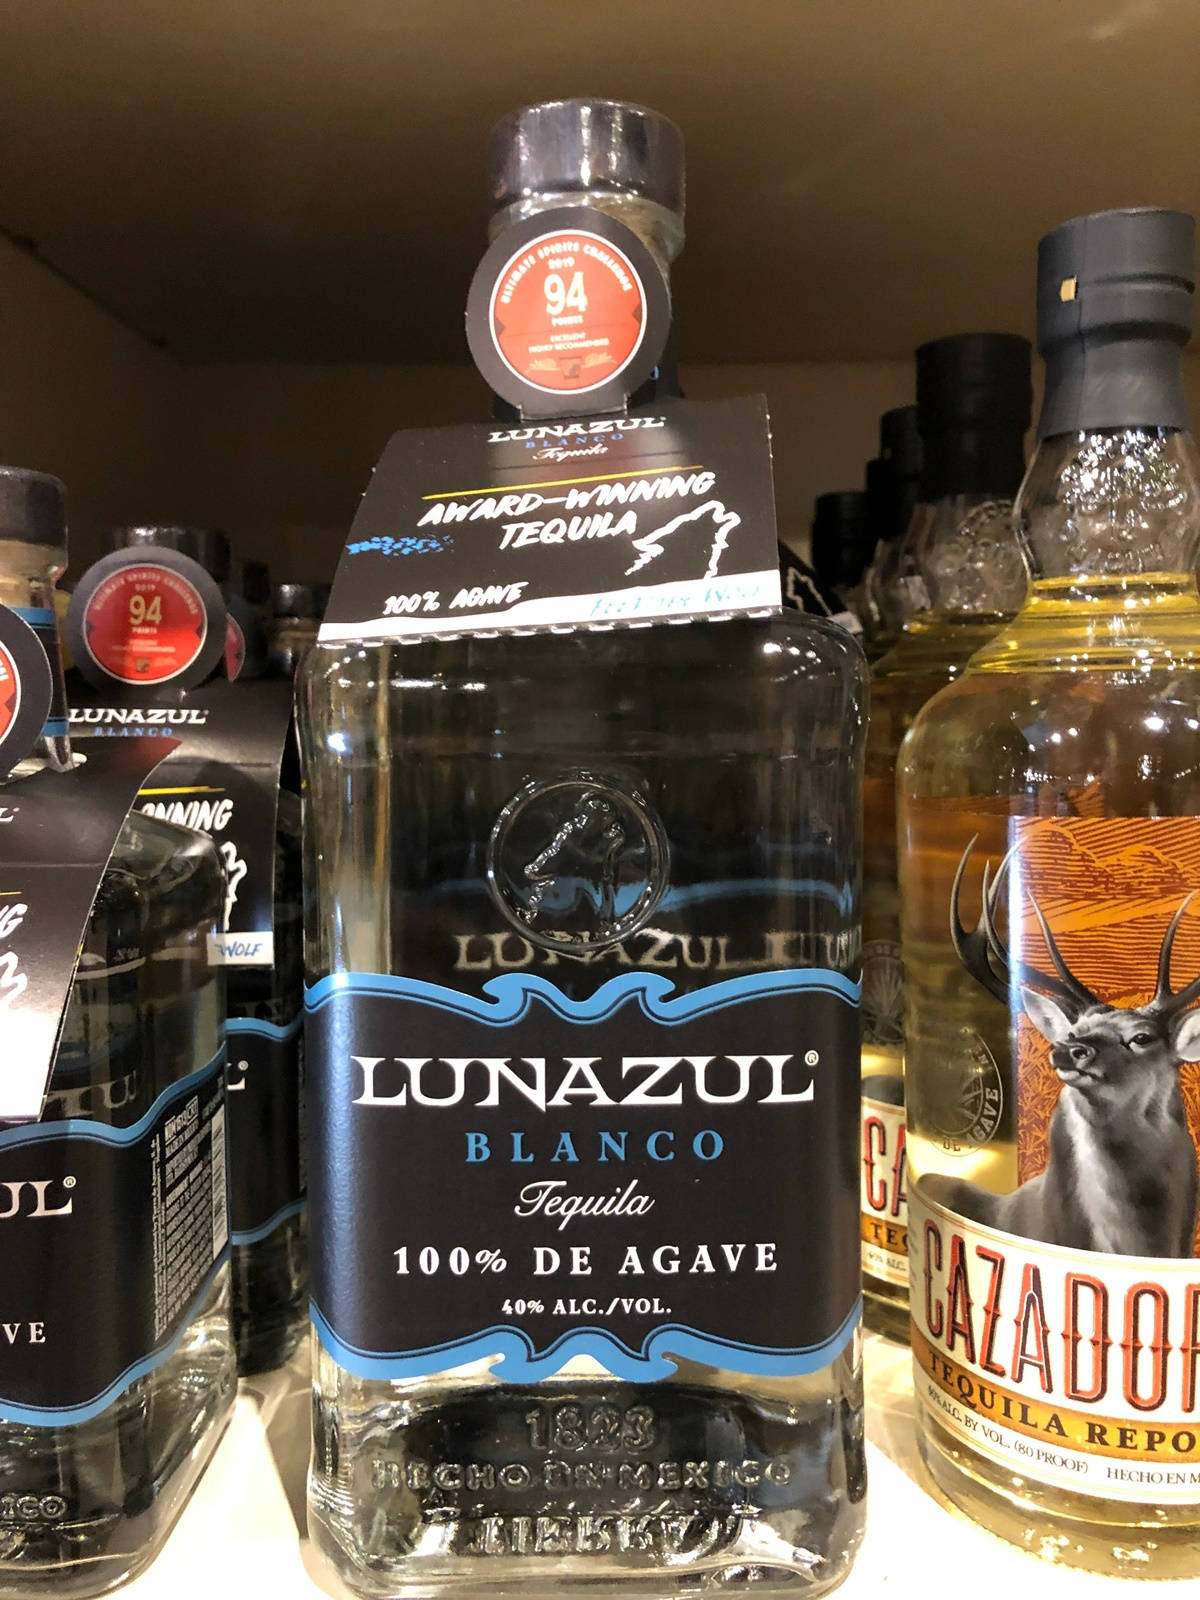 Lunazulblanco, Tequila Premiato Sfondo